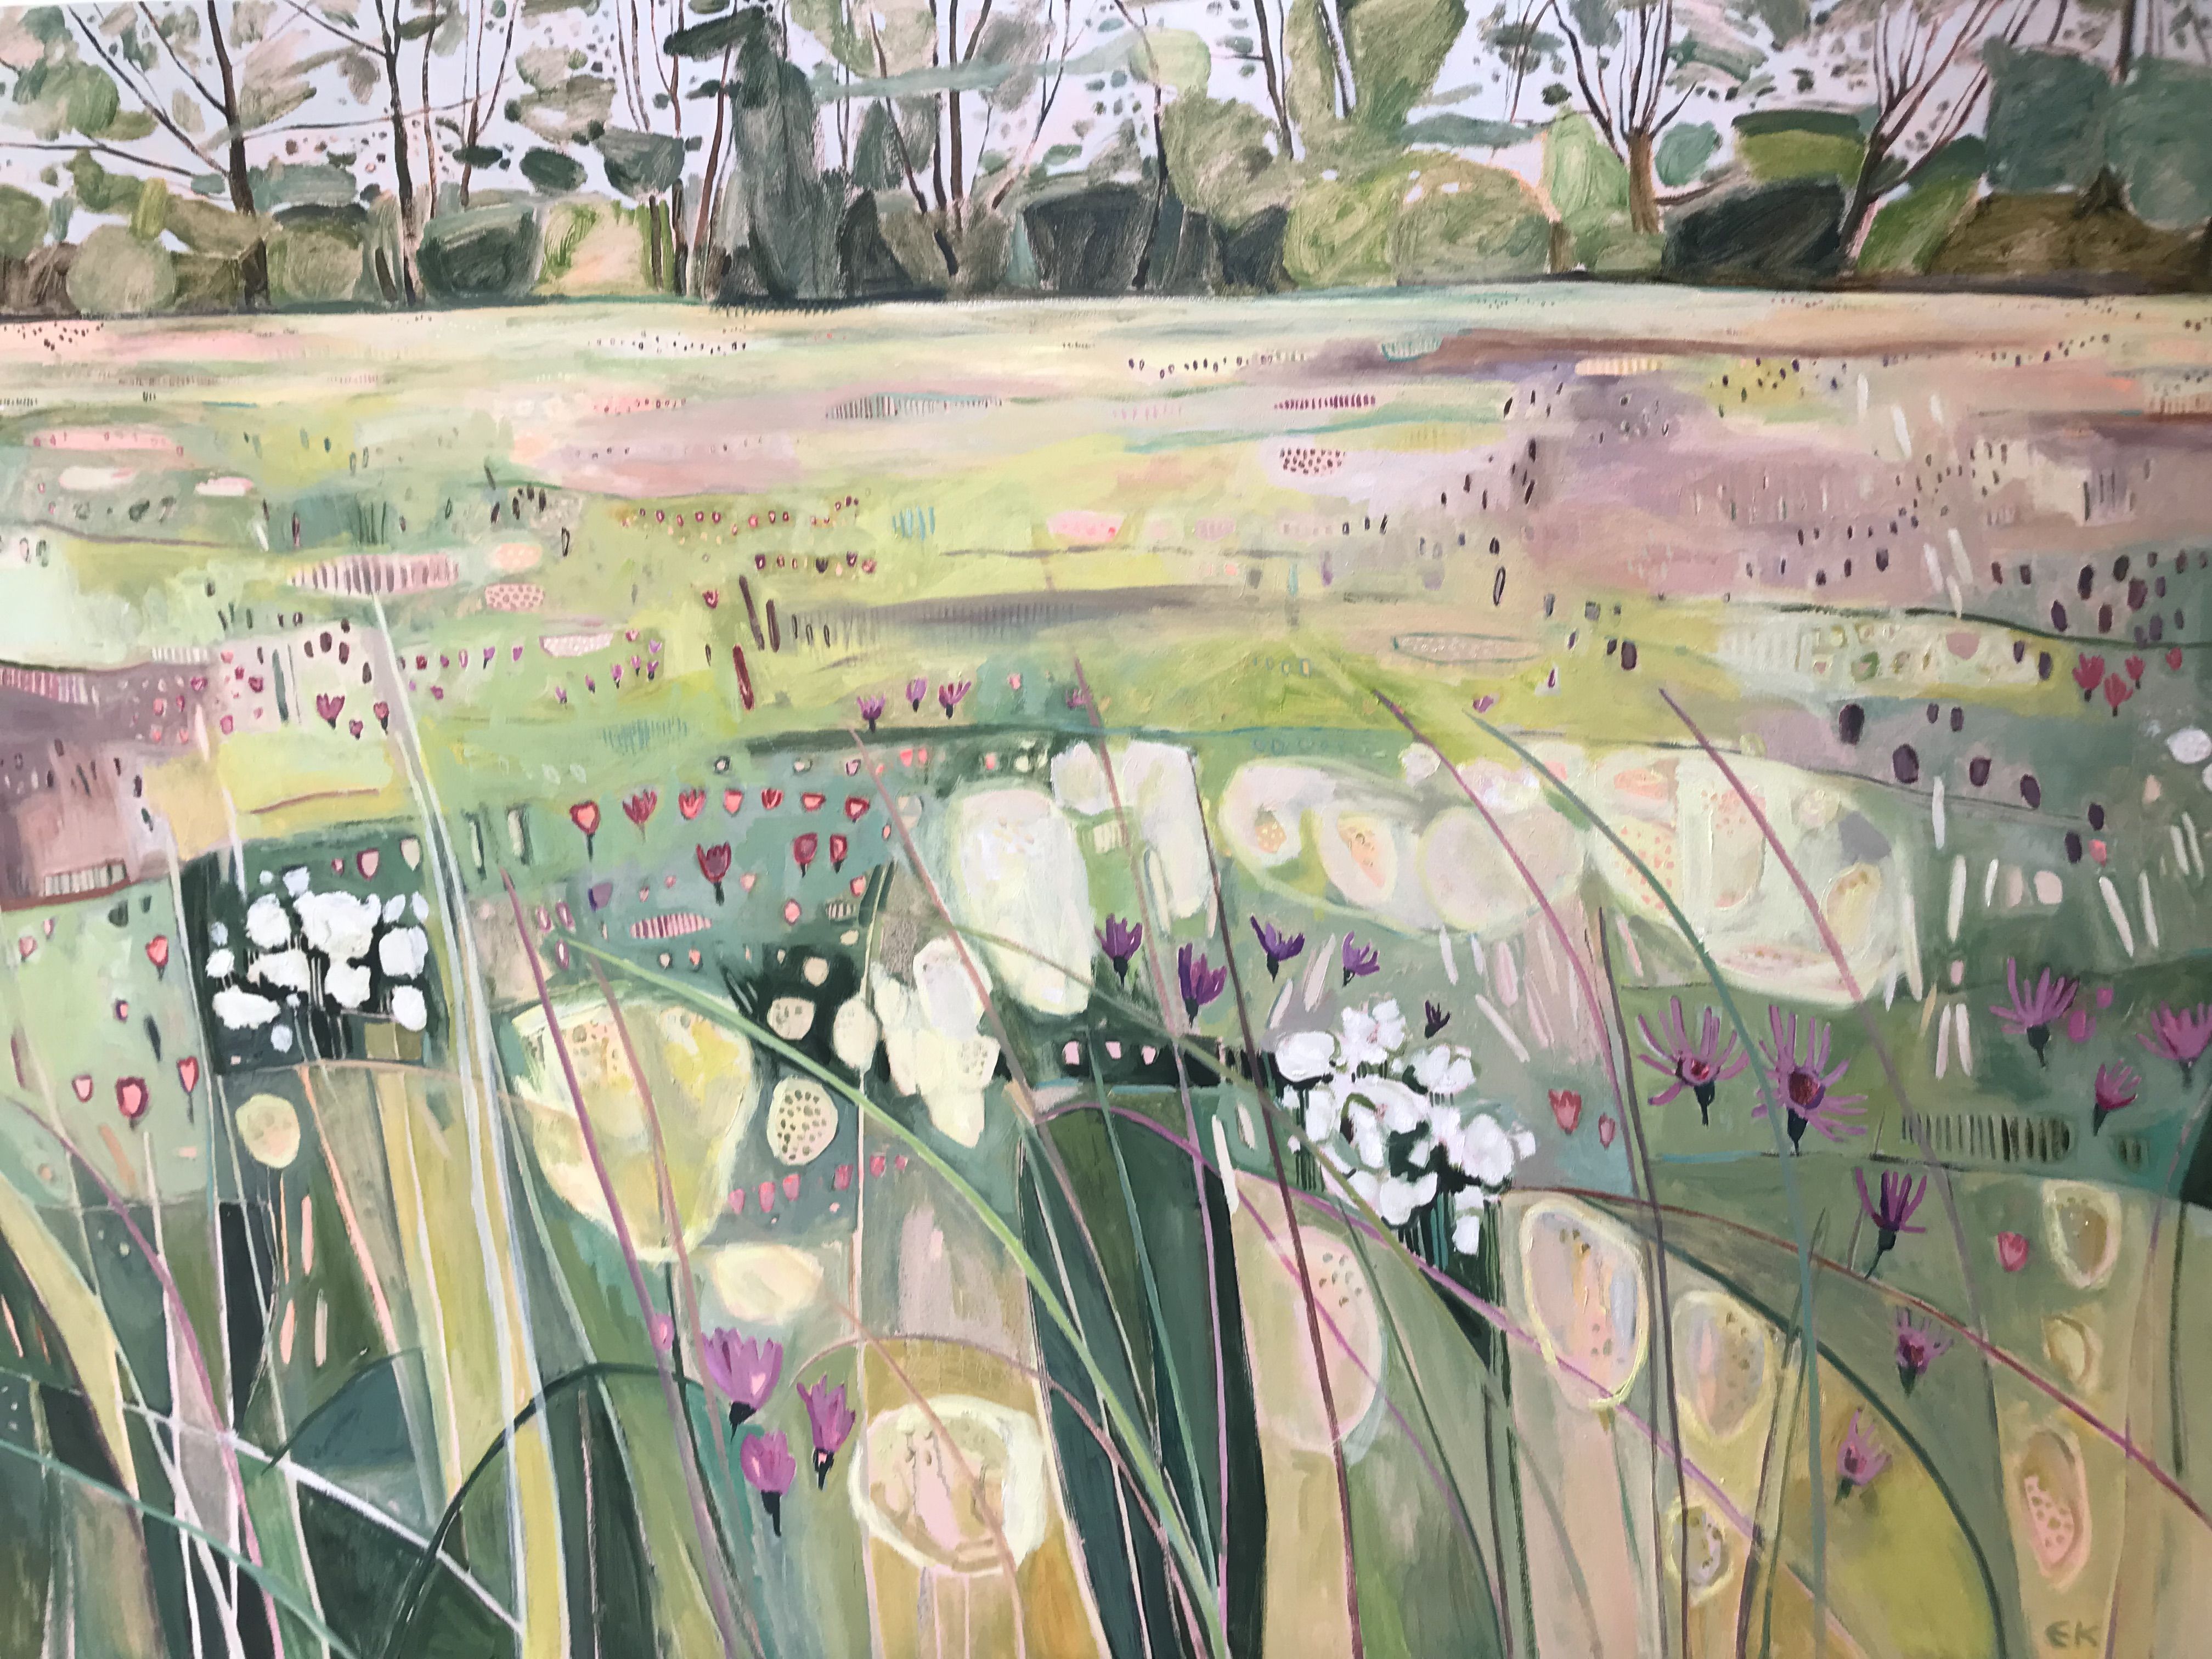 Hinksey Meadow in Full Bloom by Elaine Kazimierczuk